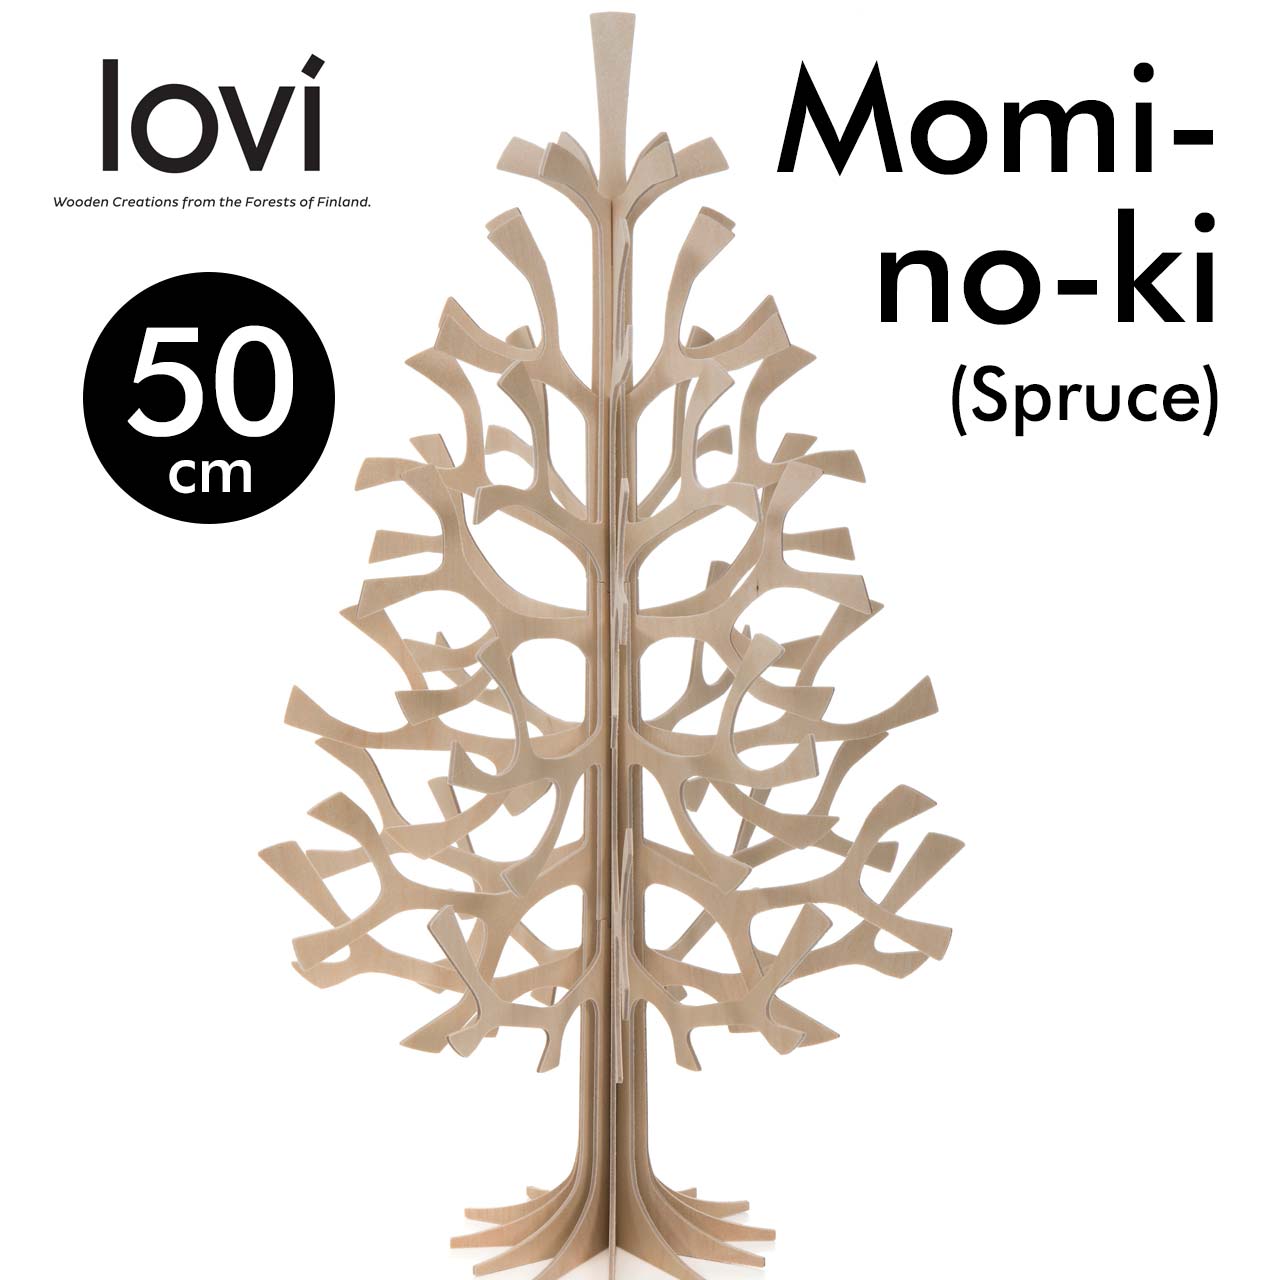 Lovi（ロヴィ）クリスマスツリー 50cm グレー もみの木 Momi-no-ki 北欧 フィンランド - 4